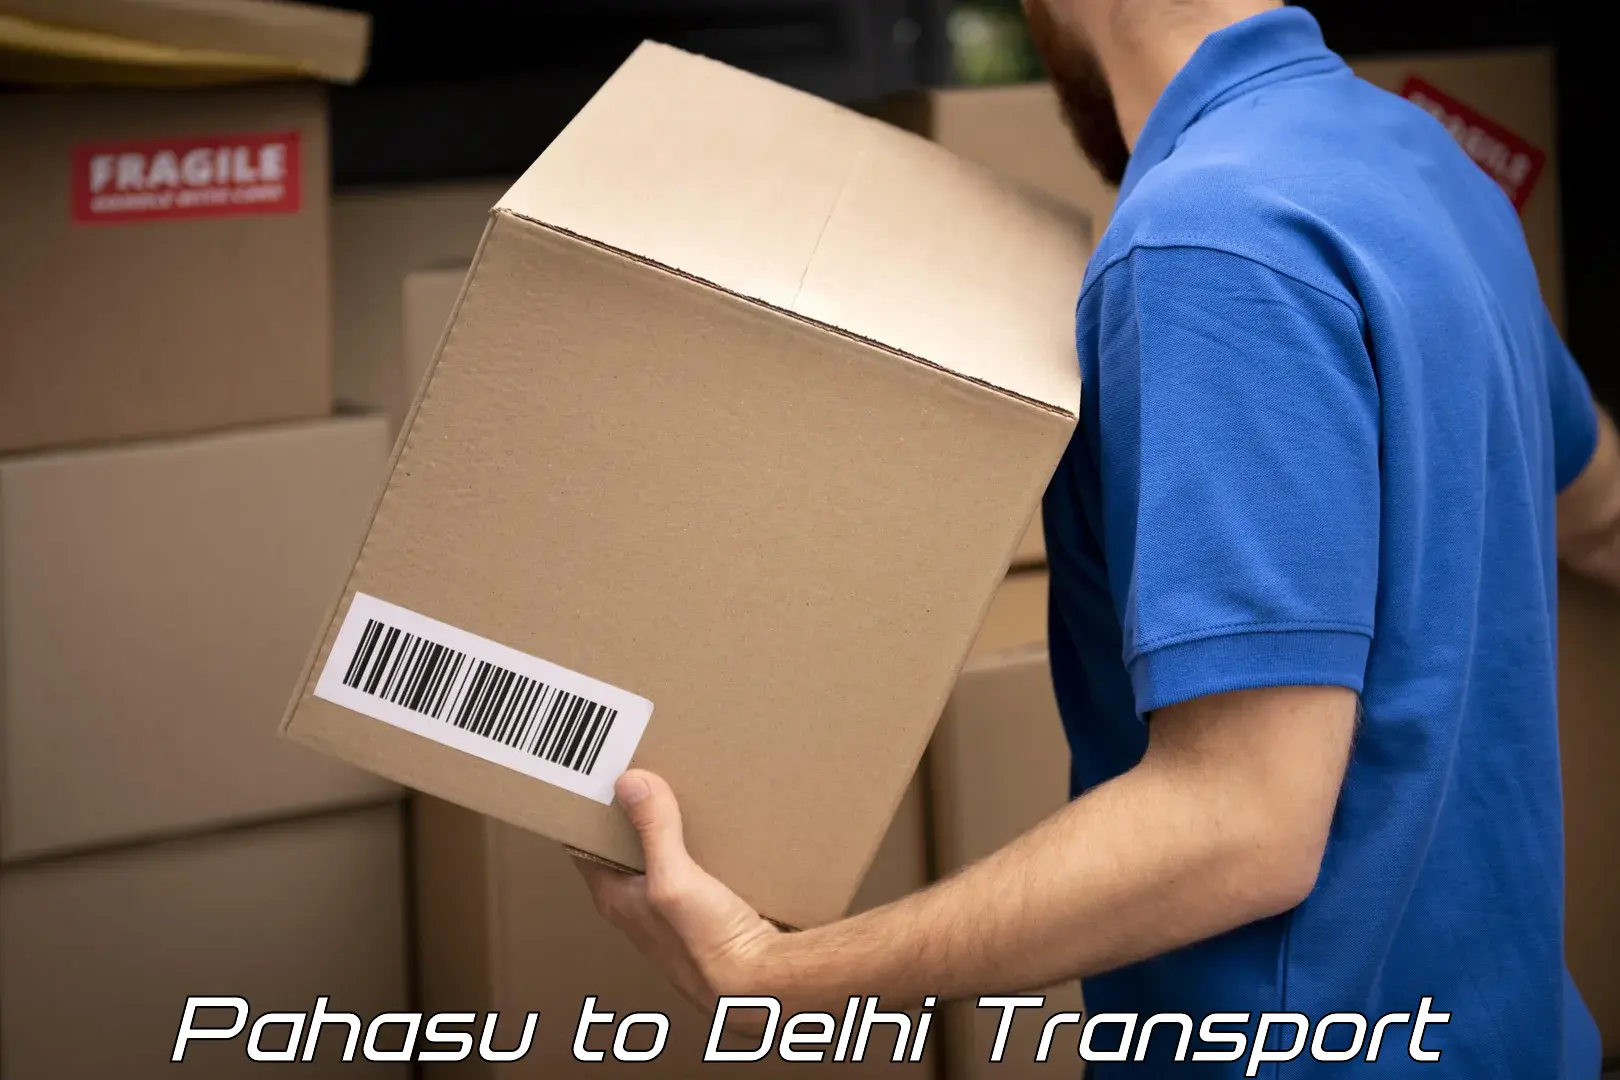 Pick up transport service Pahasu to University of Delhi